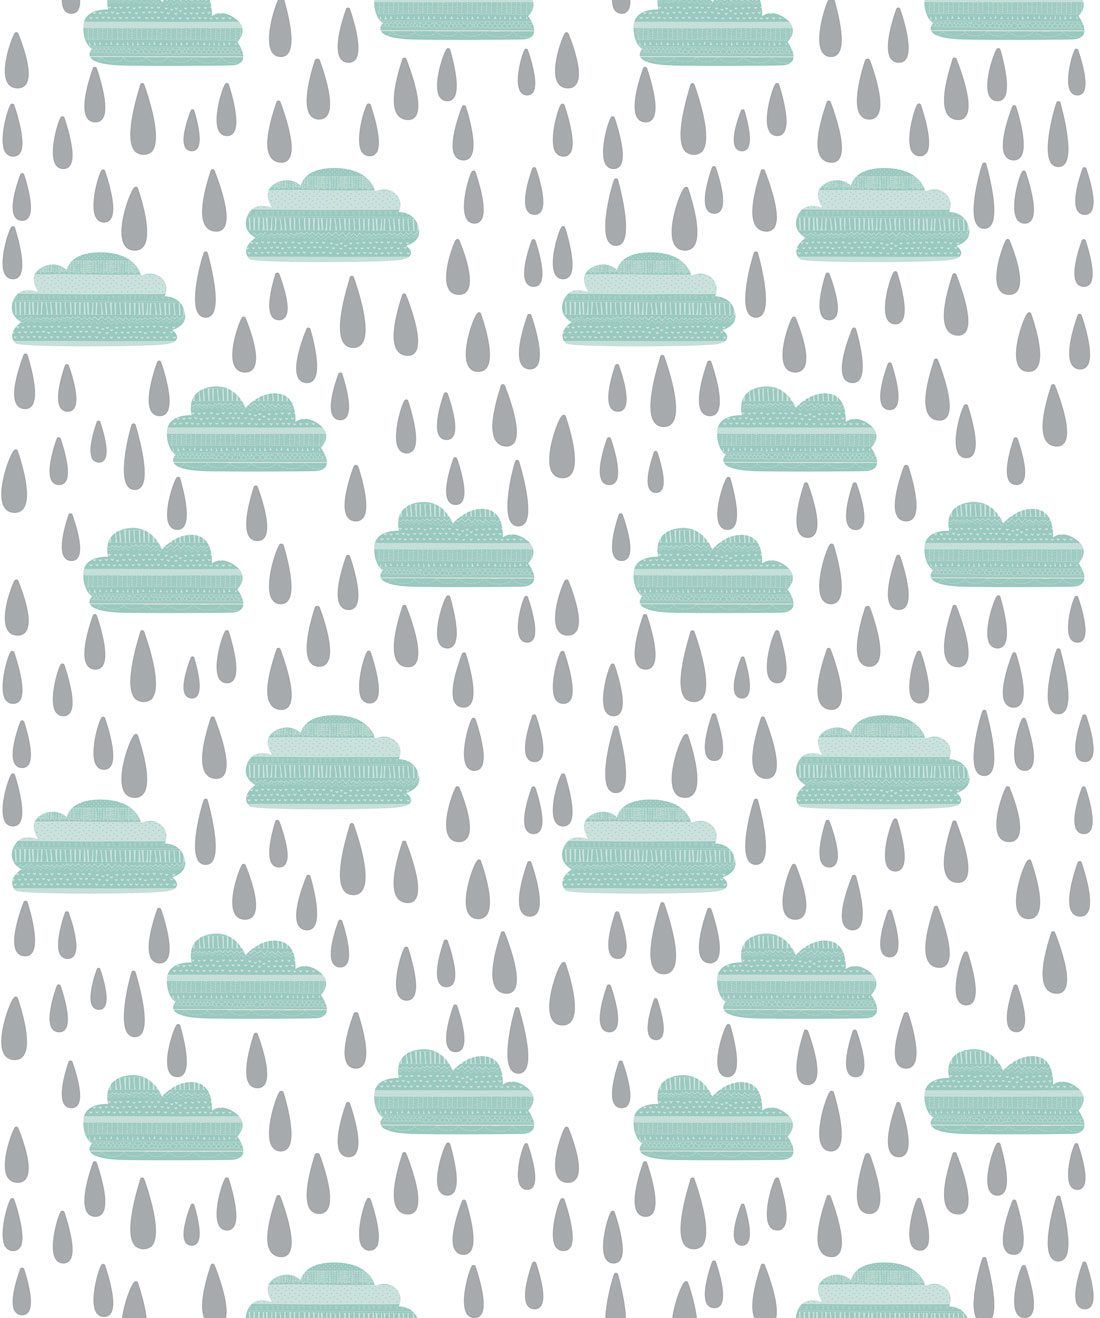 Rainy Days is a Blue Rain Cloud Wallpaper